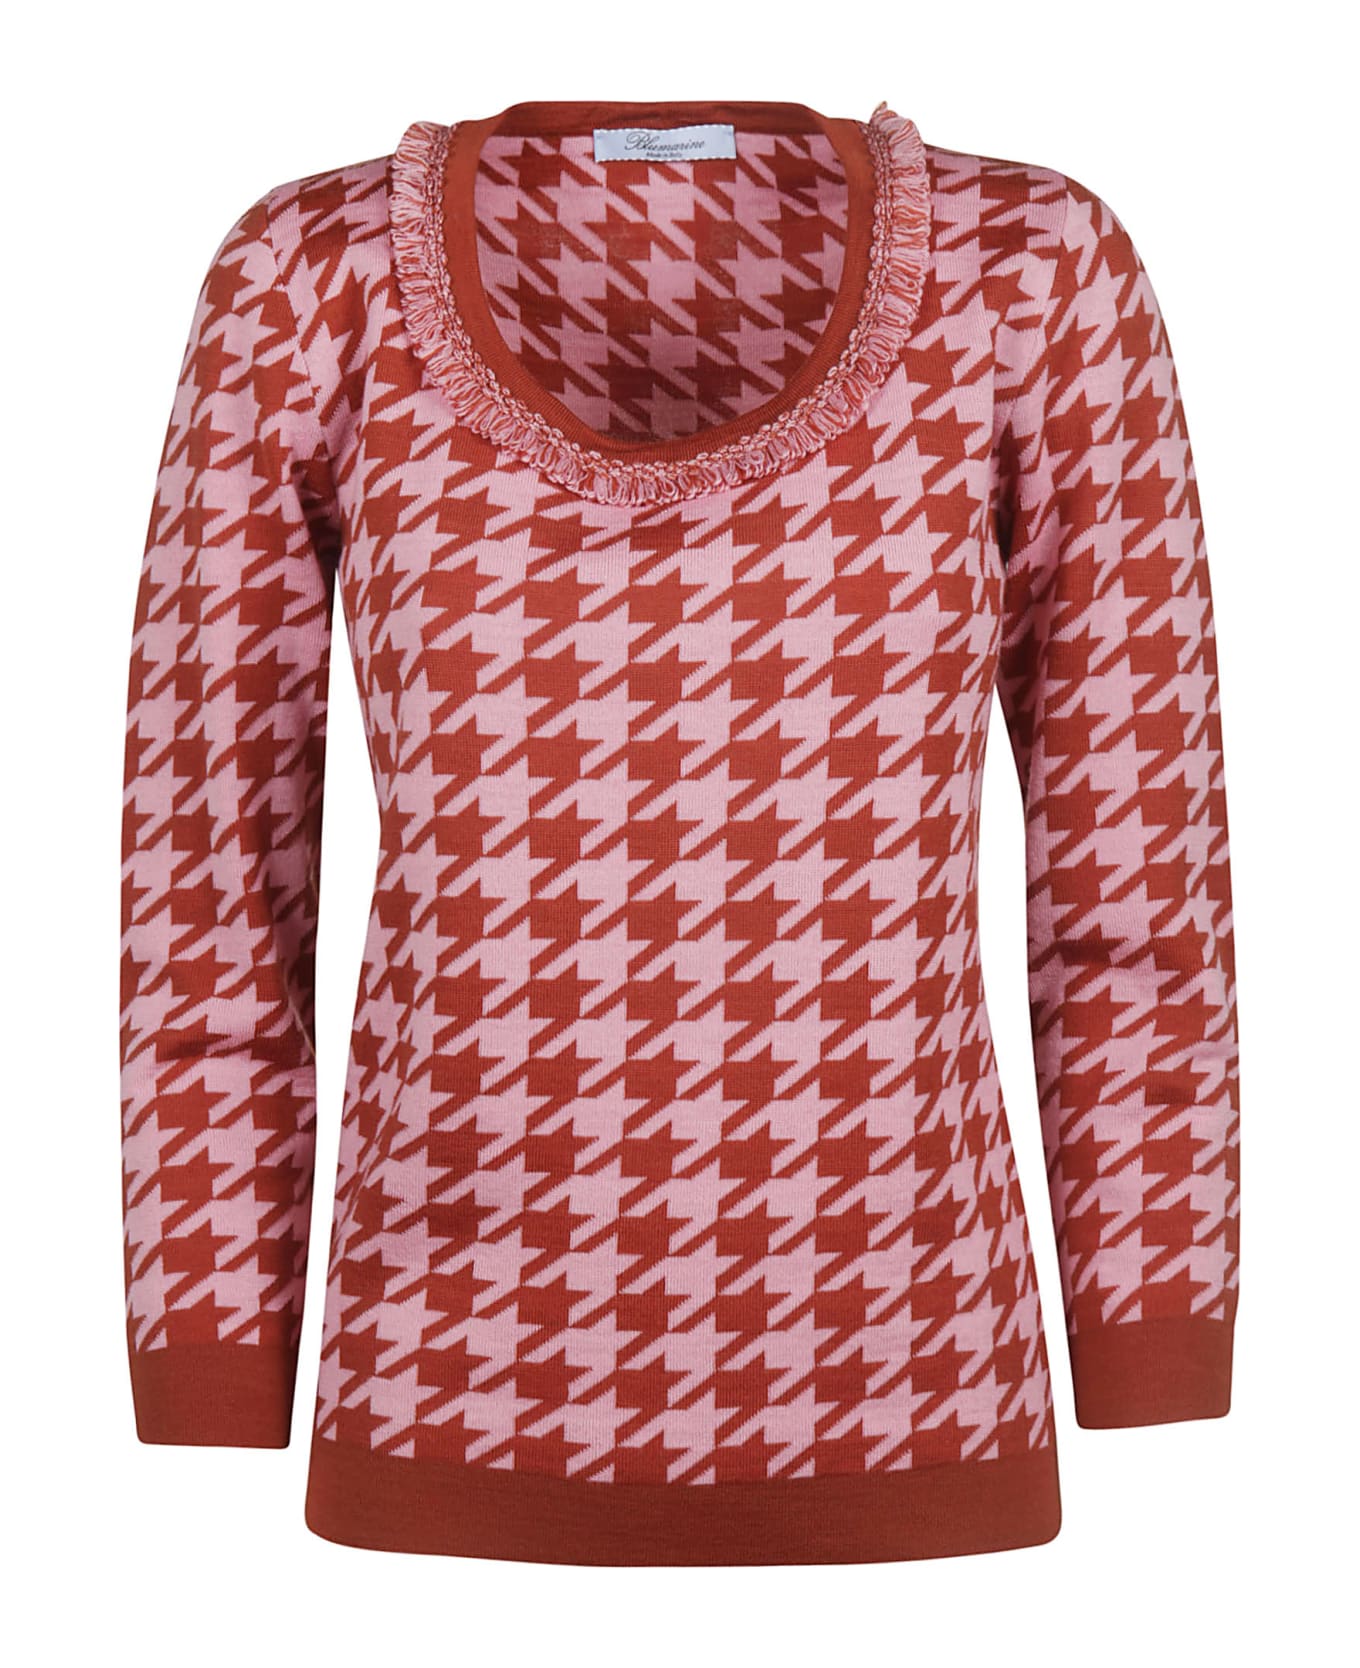 Blumarine Motif Print Sweater - Pink/Red